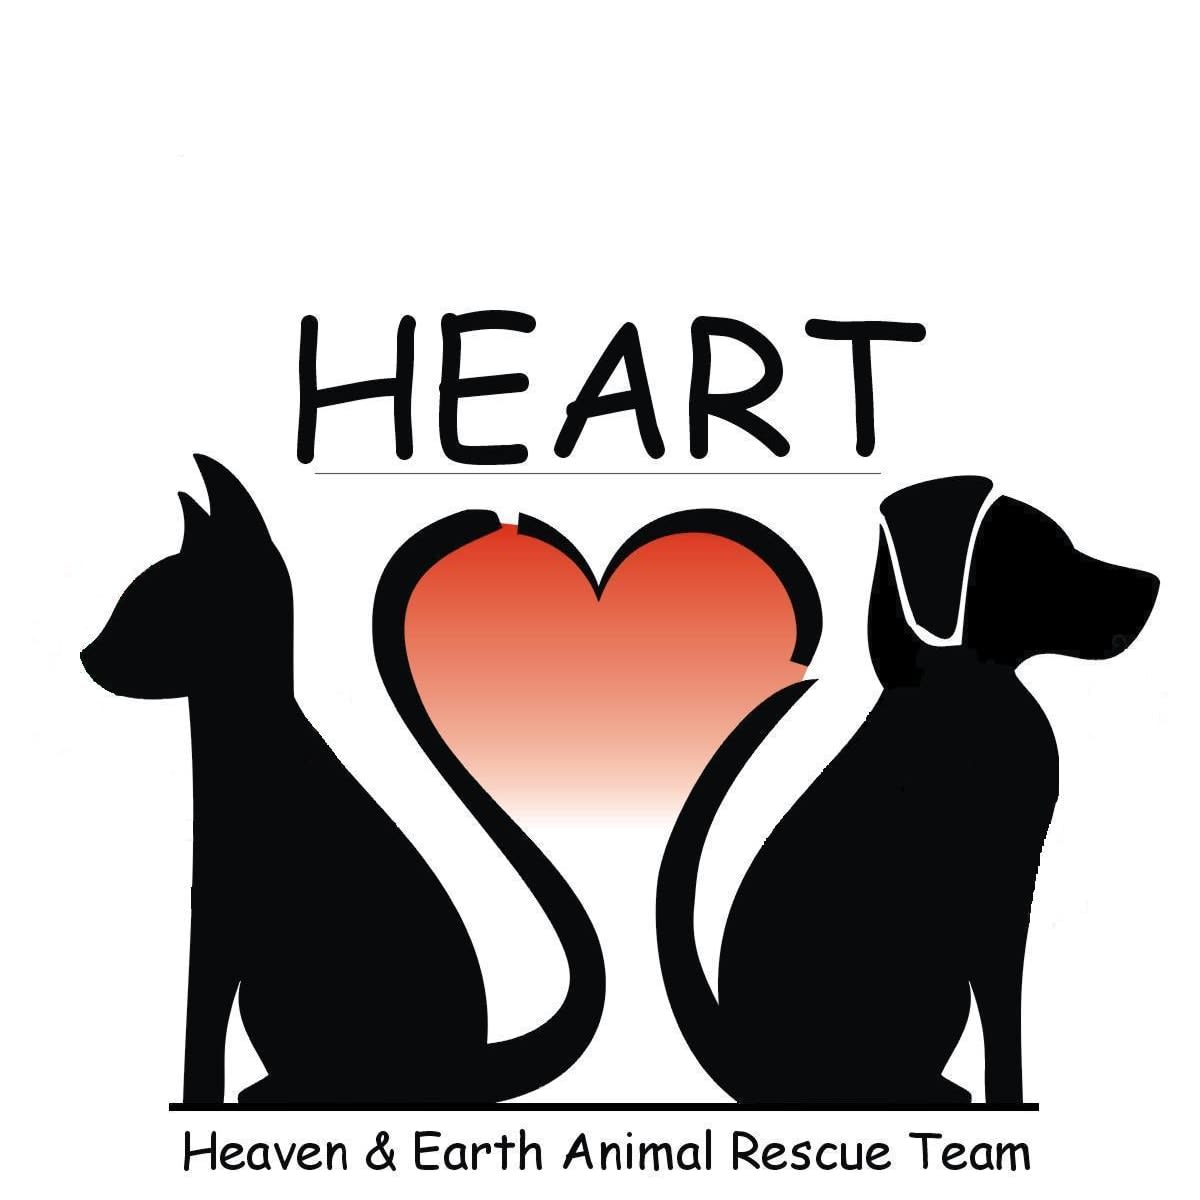 Pet heart. Heart Team. Теам Хеарт. Heart Pet.